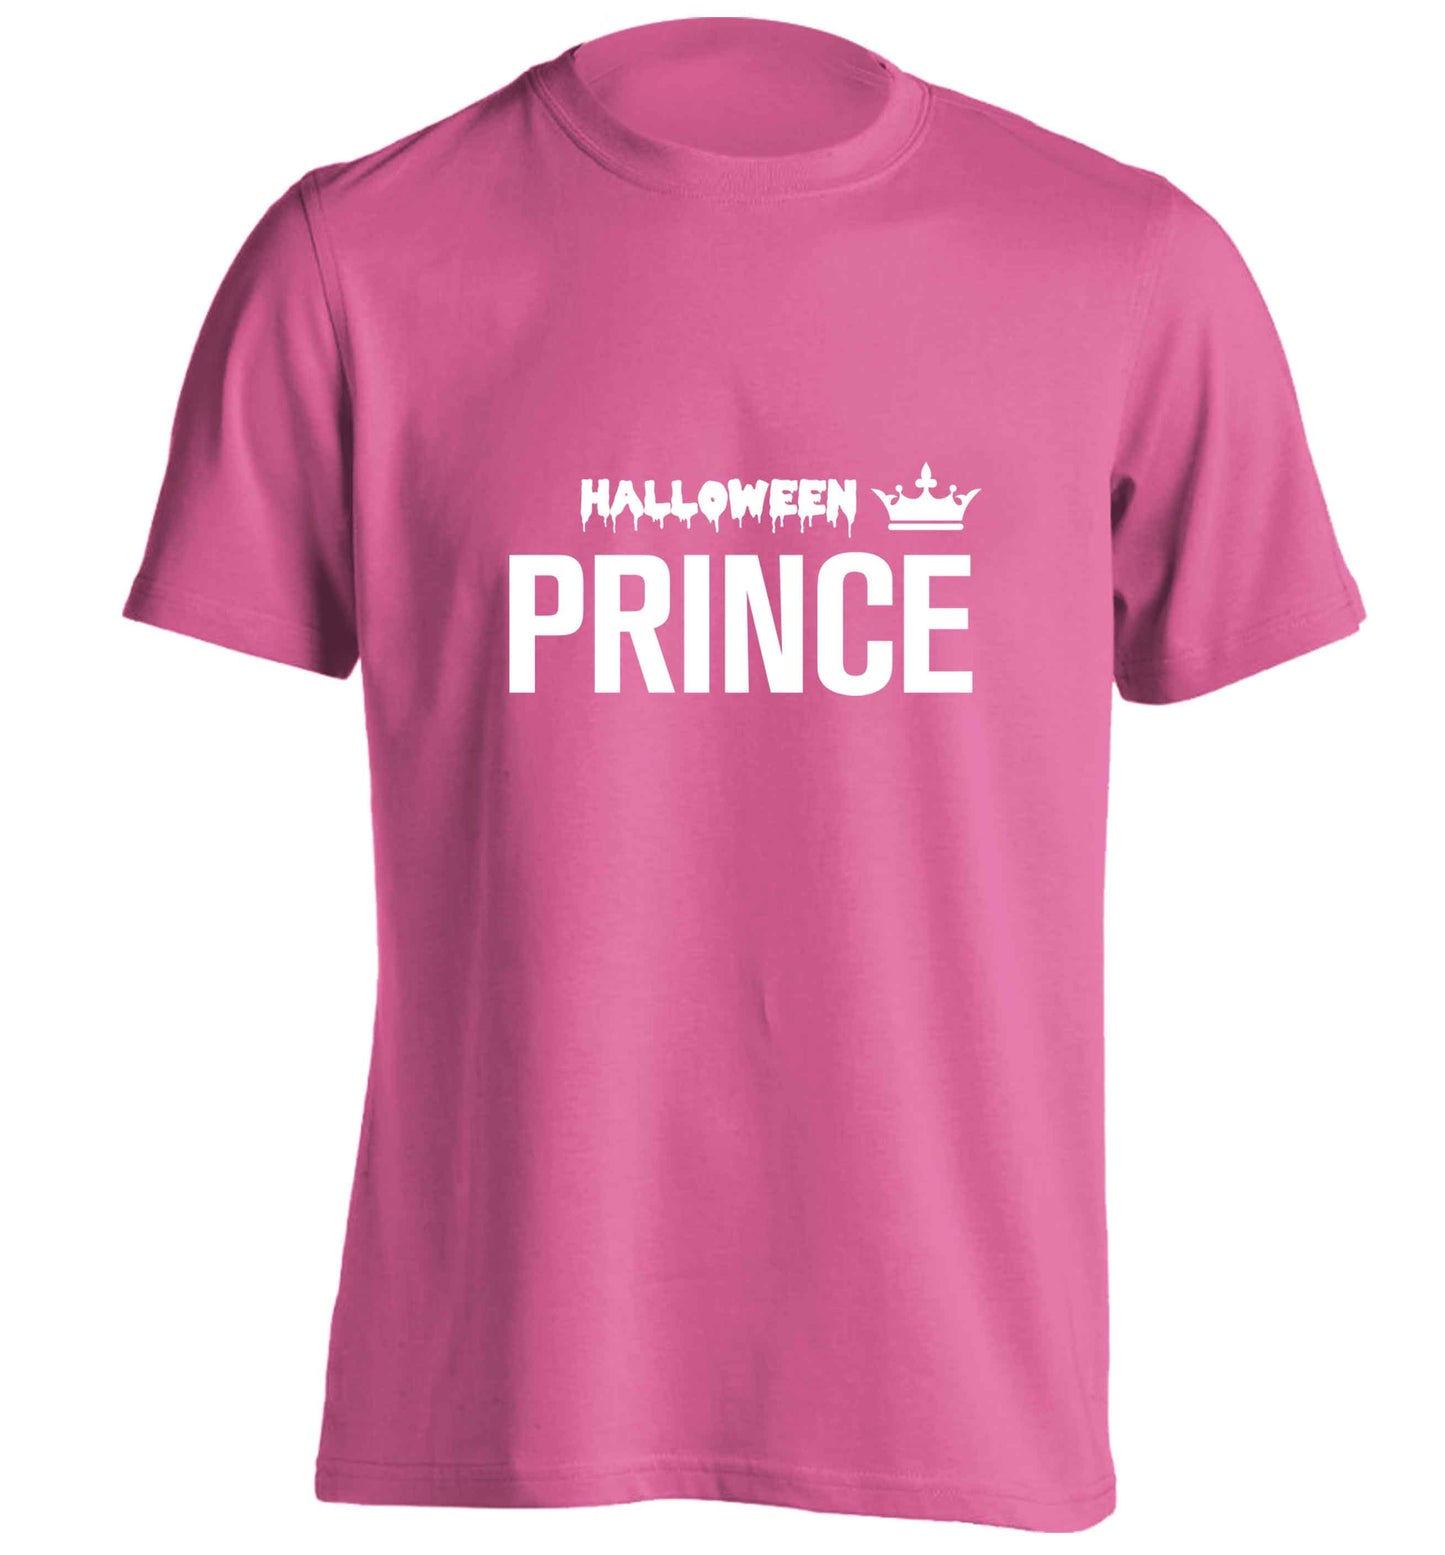 Halloween prince adults unisex pink Tshirt 2XL